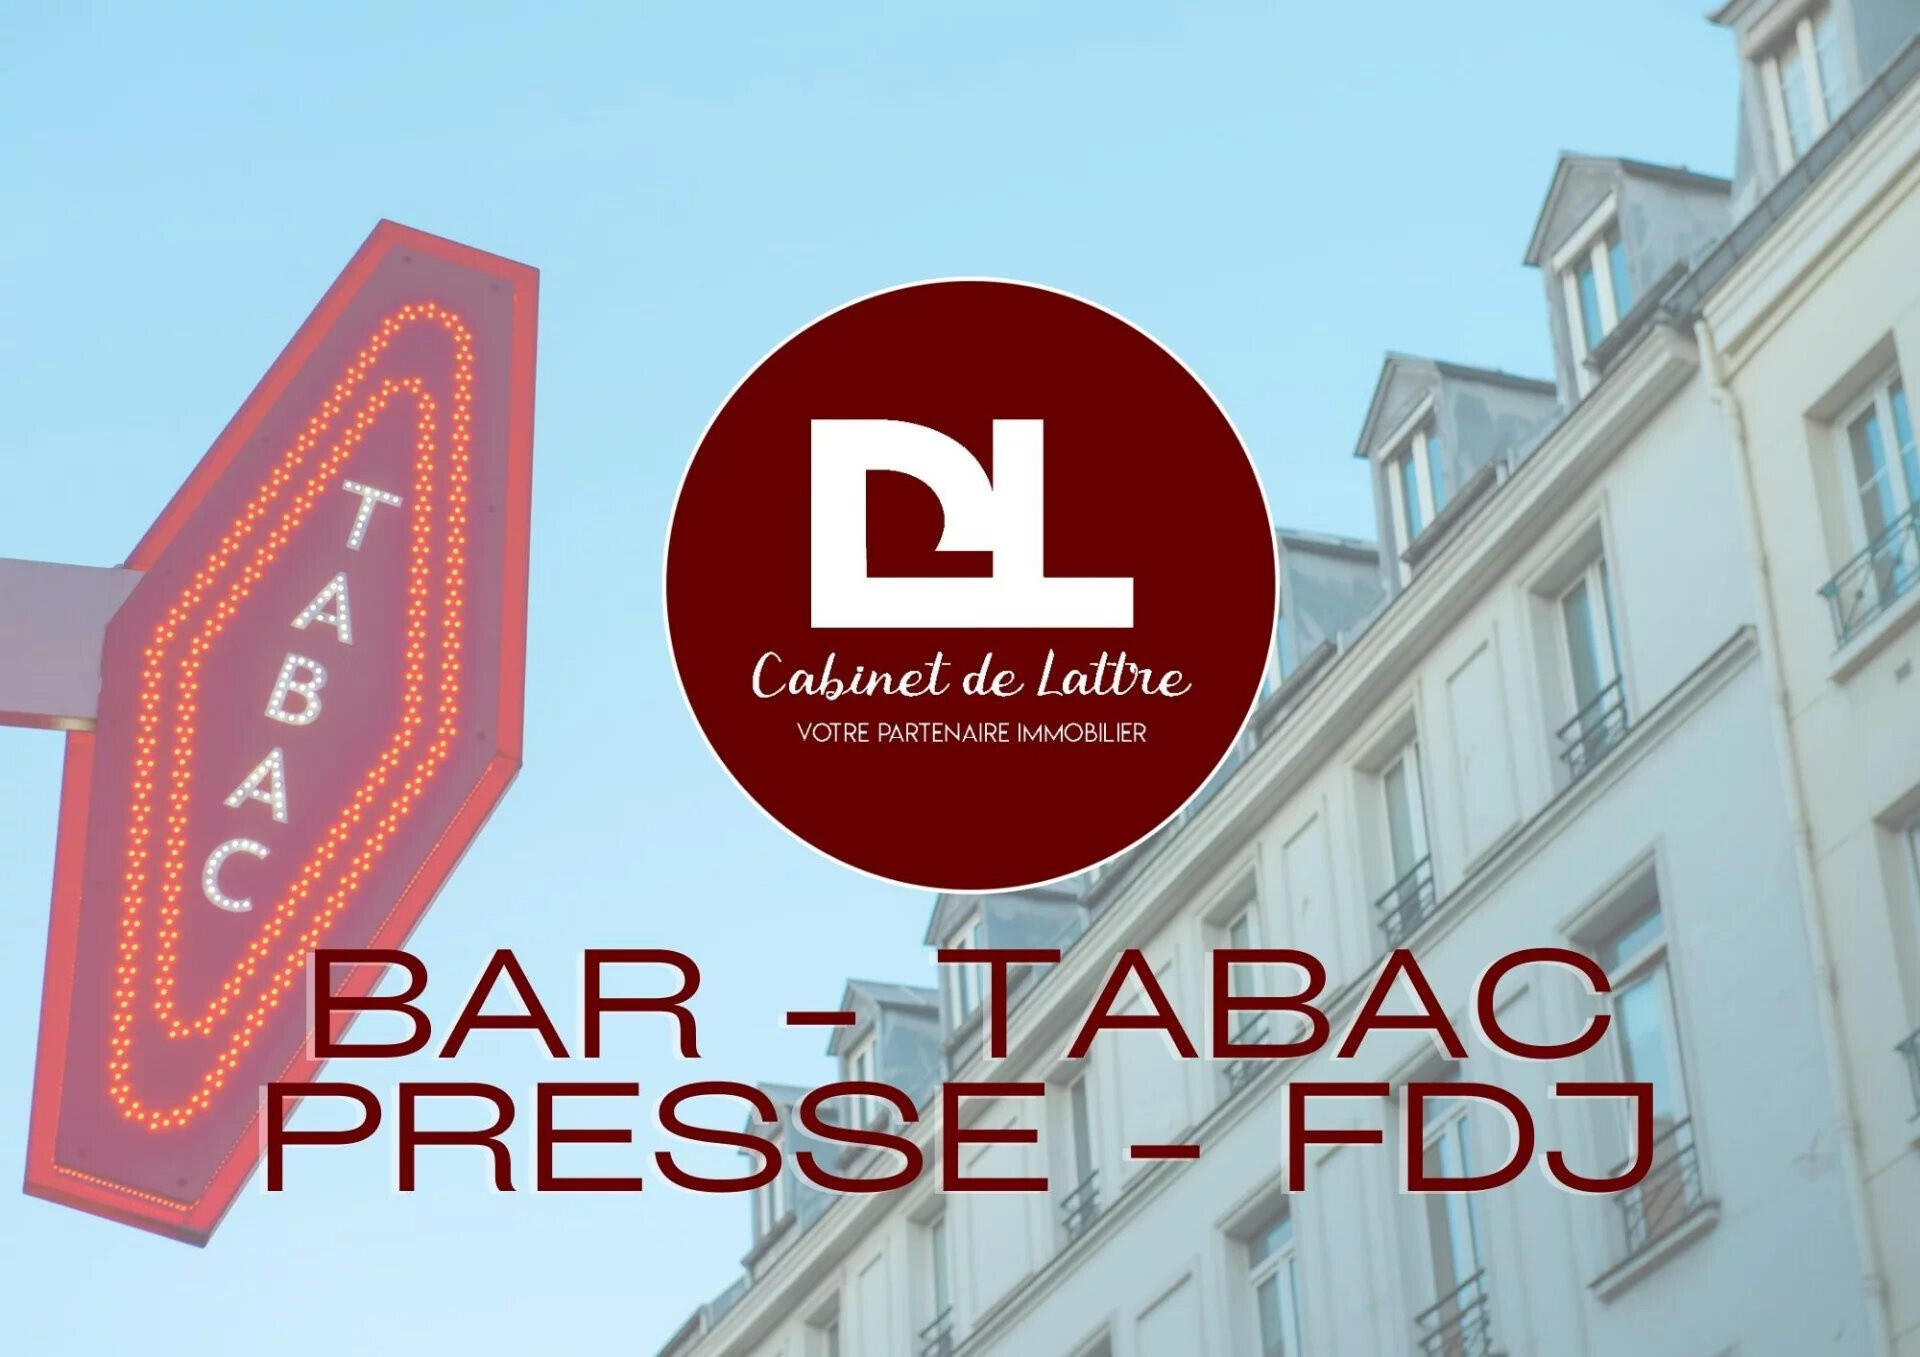 Vente bar Tabac Presse FDJ PMU Clermont-FD